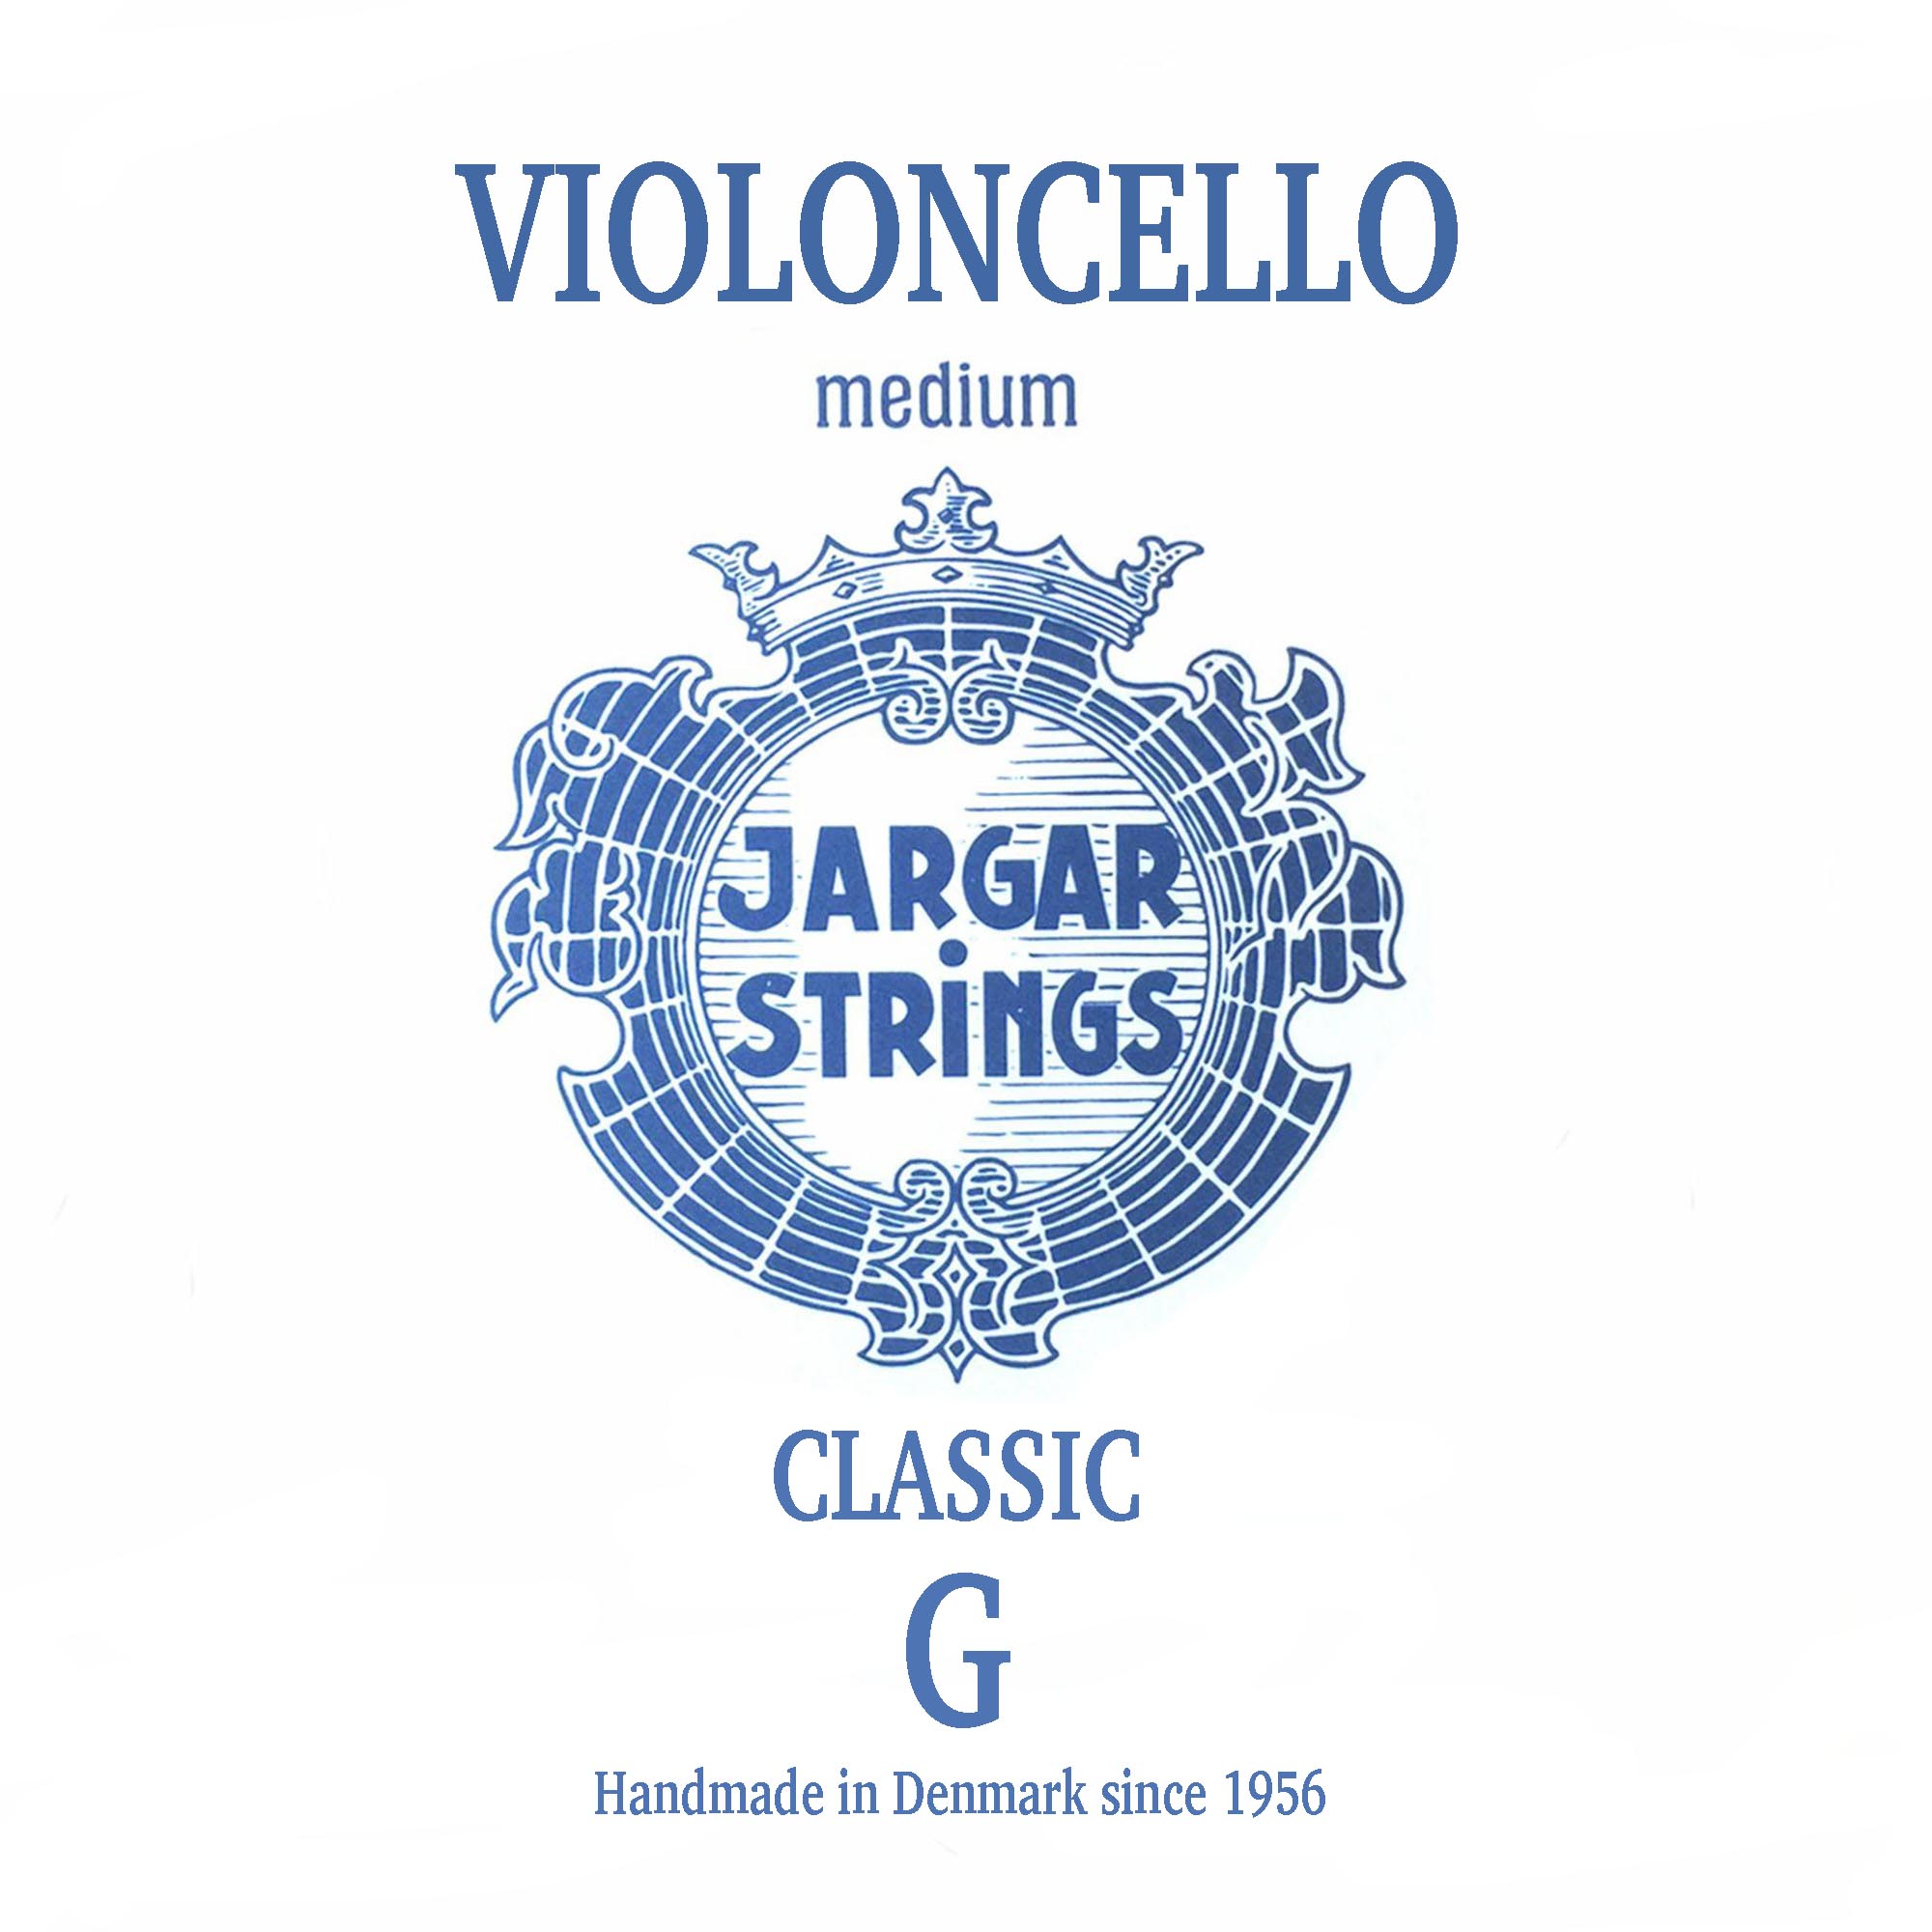 Jargar Classic Cello G String